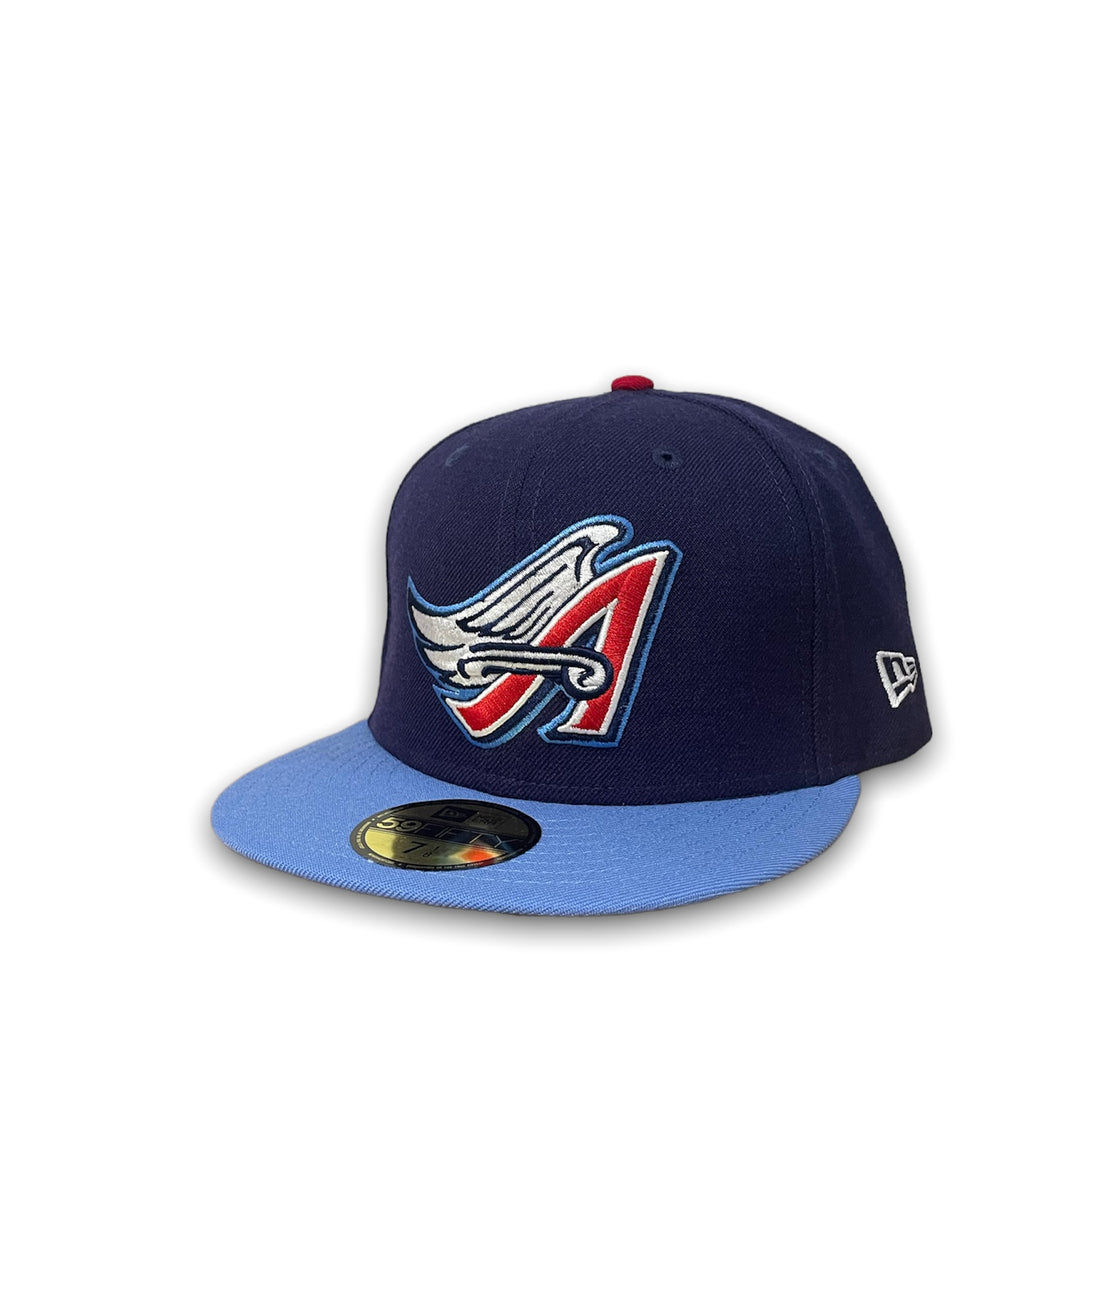 Anaheim Angels Fitted Hat